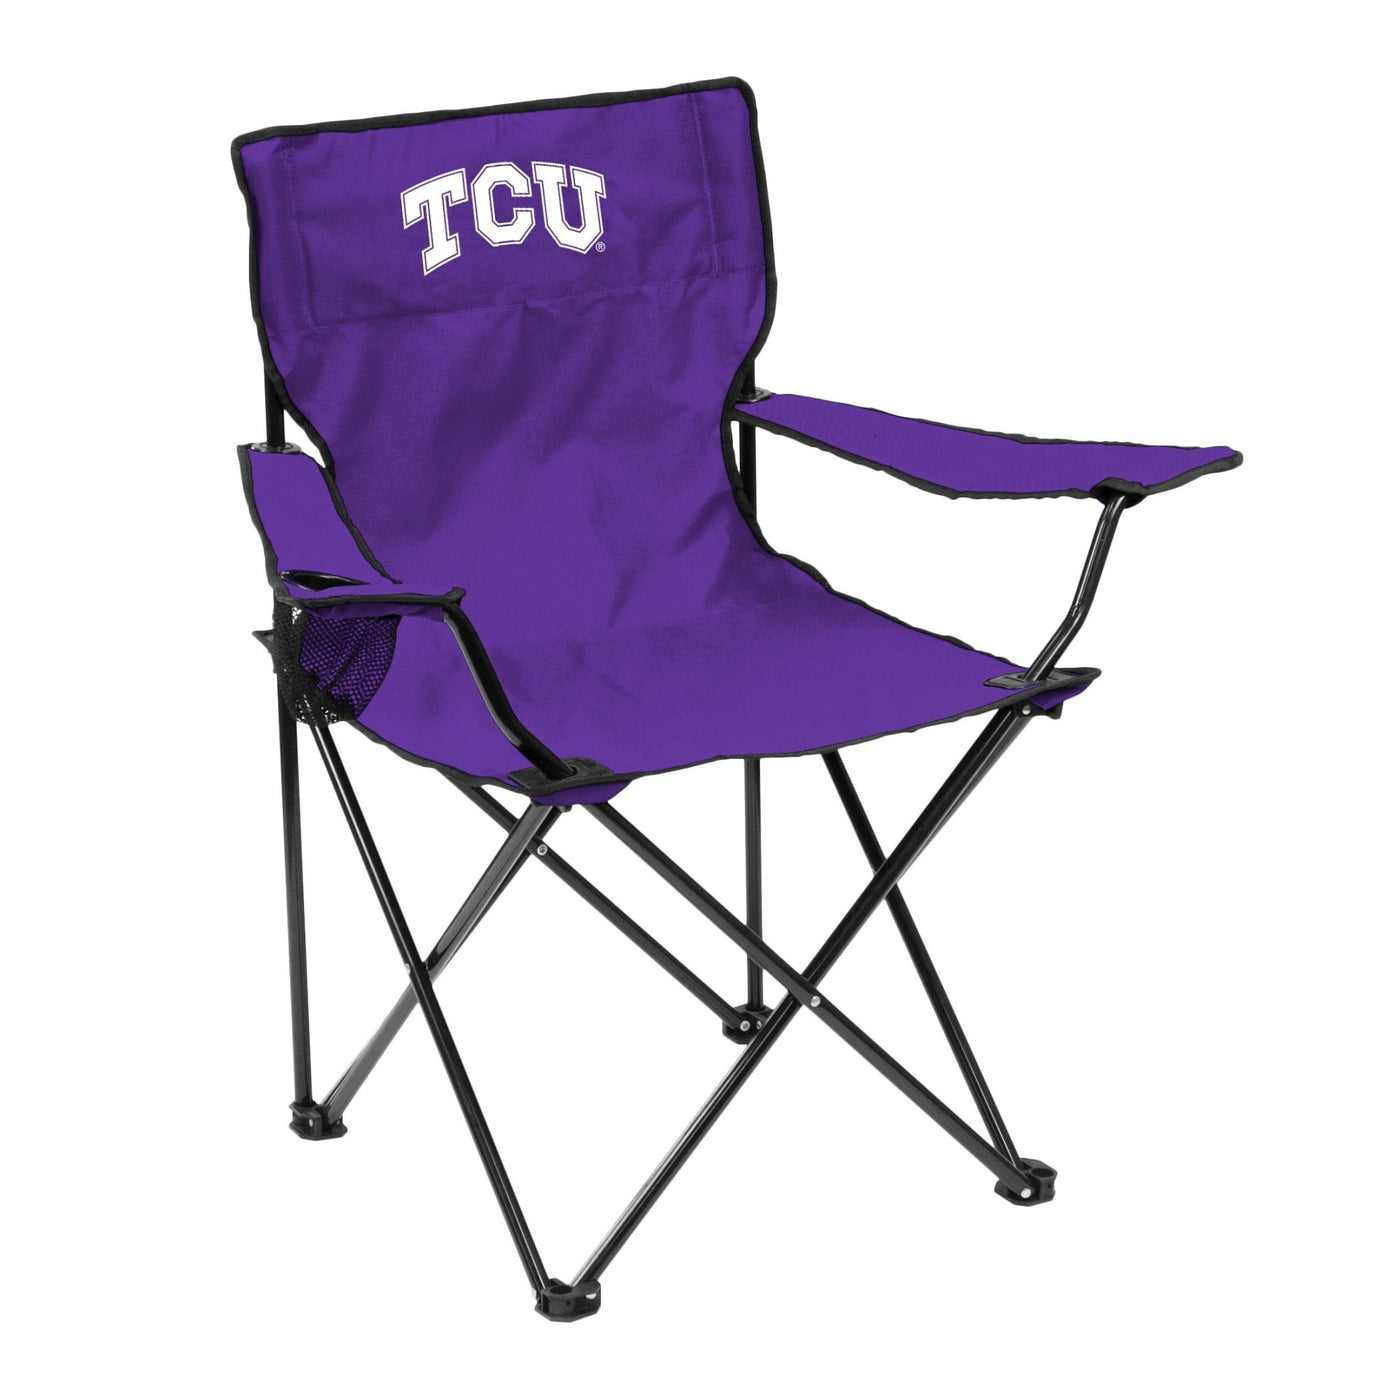 TCU Quad Chair - Logo Brands